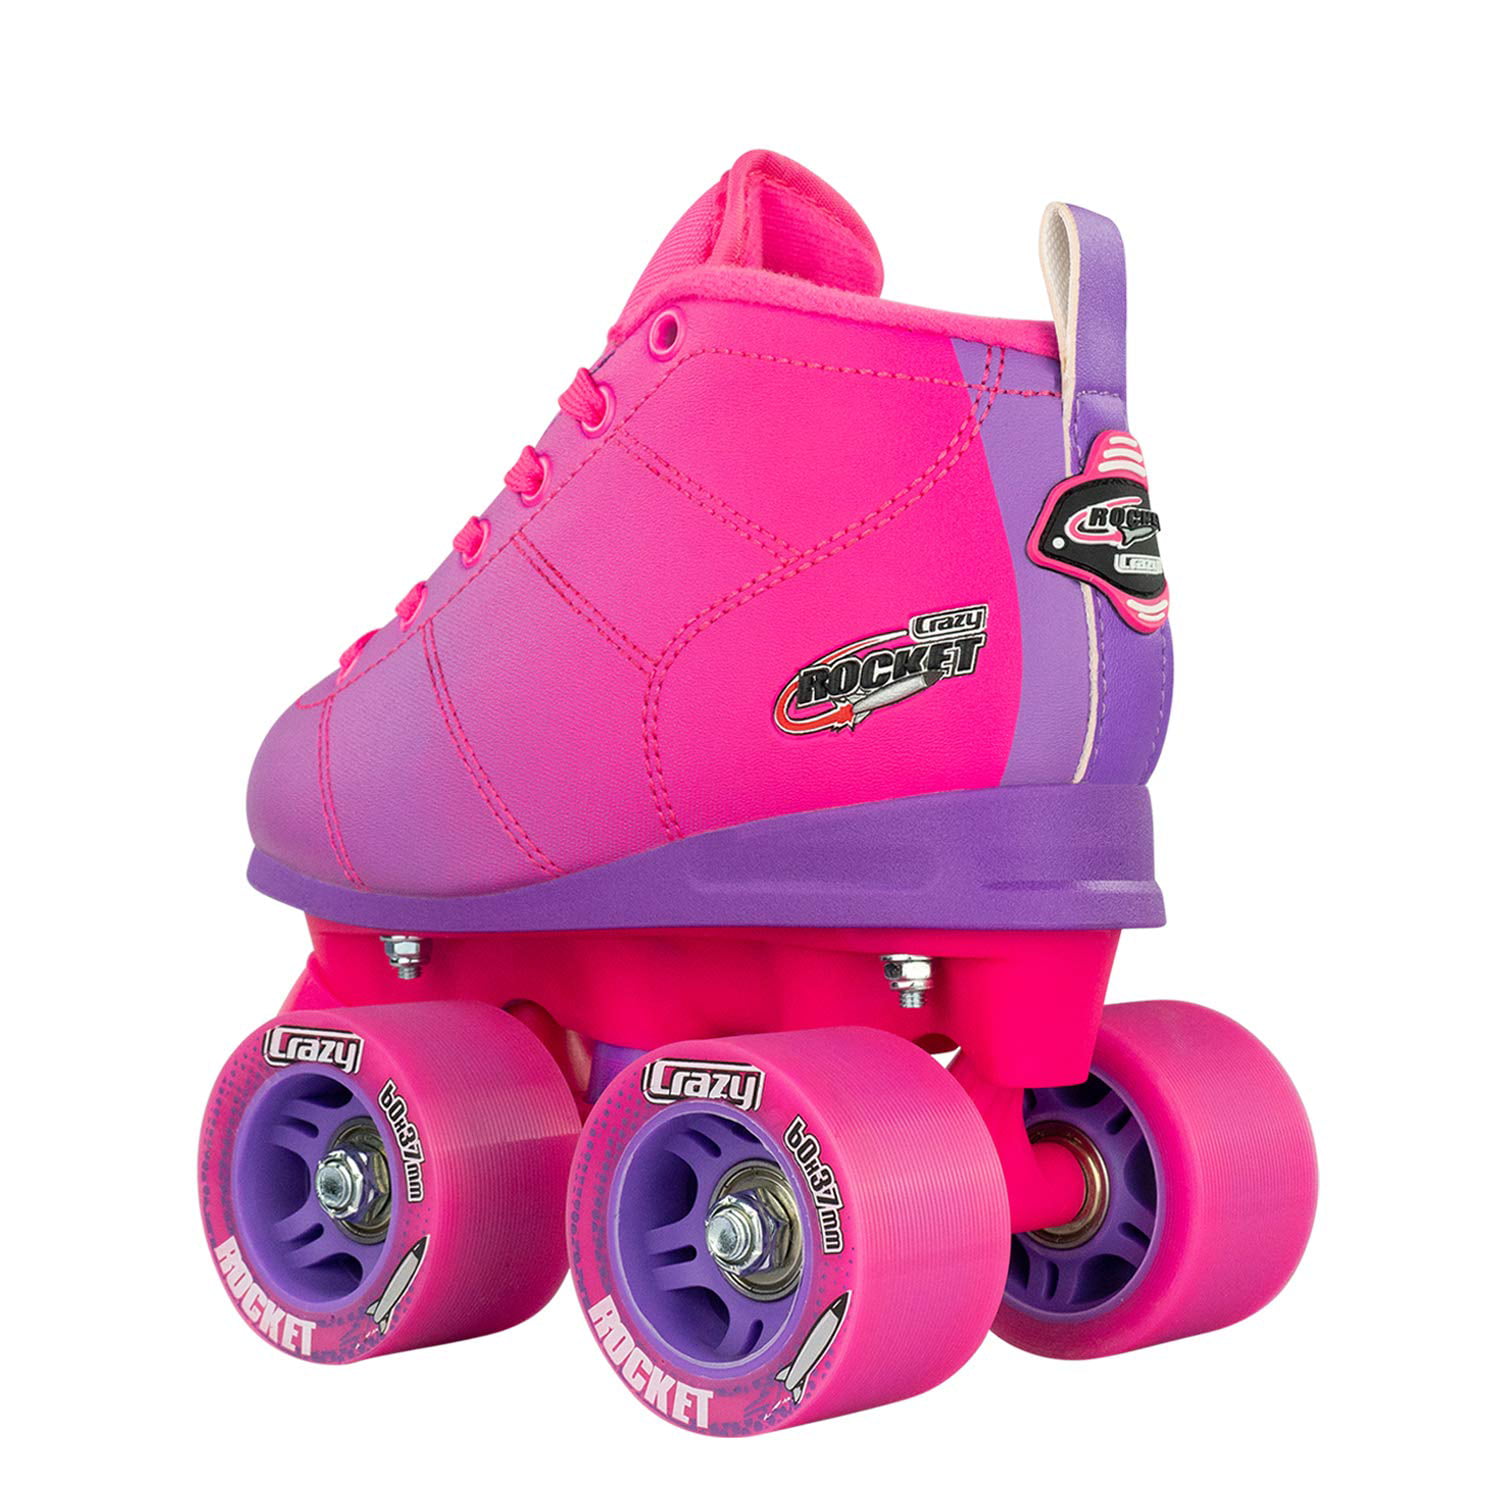 Available in Two Great Beginner Kids Quad Skates Crazy Skates Rocket Roller Skates for Girls and Boys 